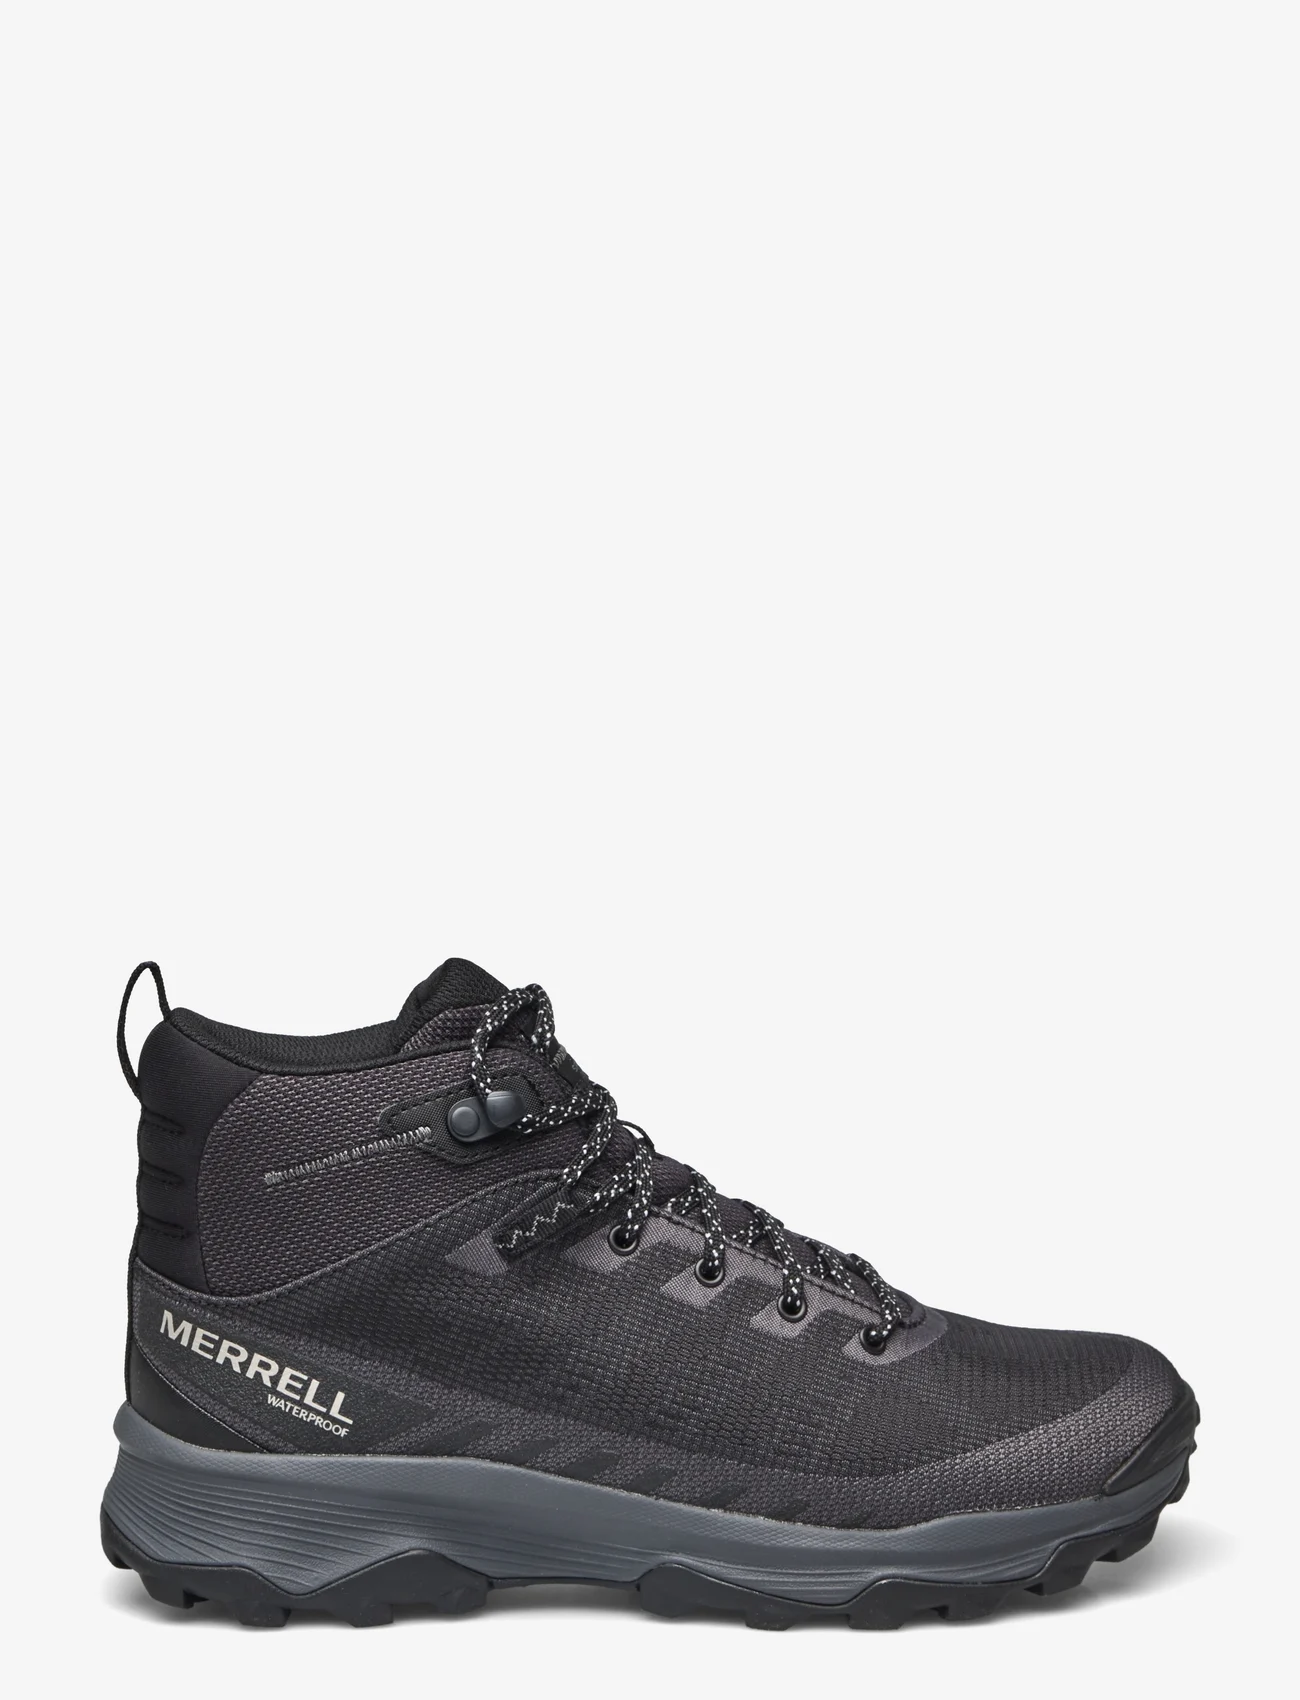 Merrell - Men's Speed Eco Mid WP - Black - hiking shoes - black - 1